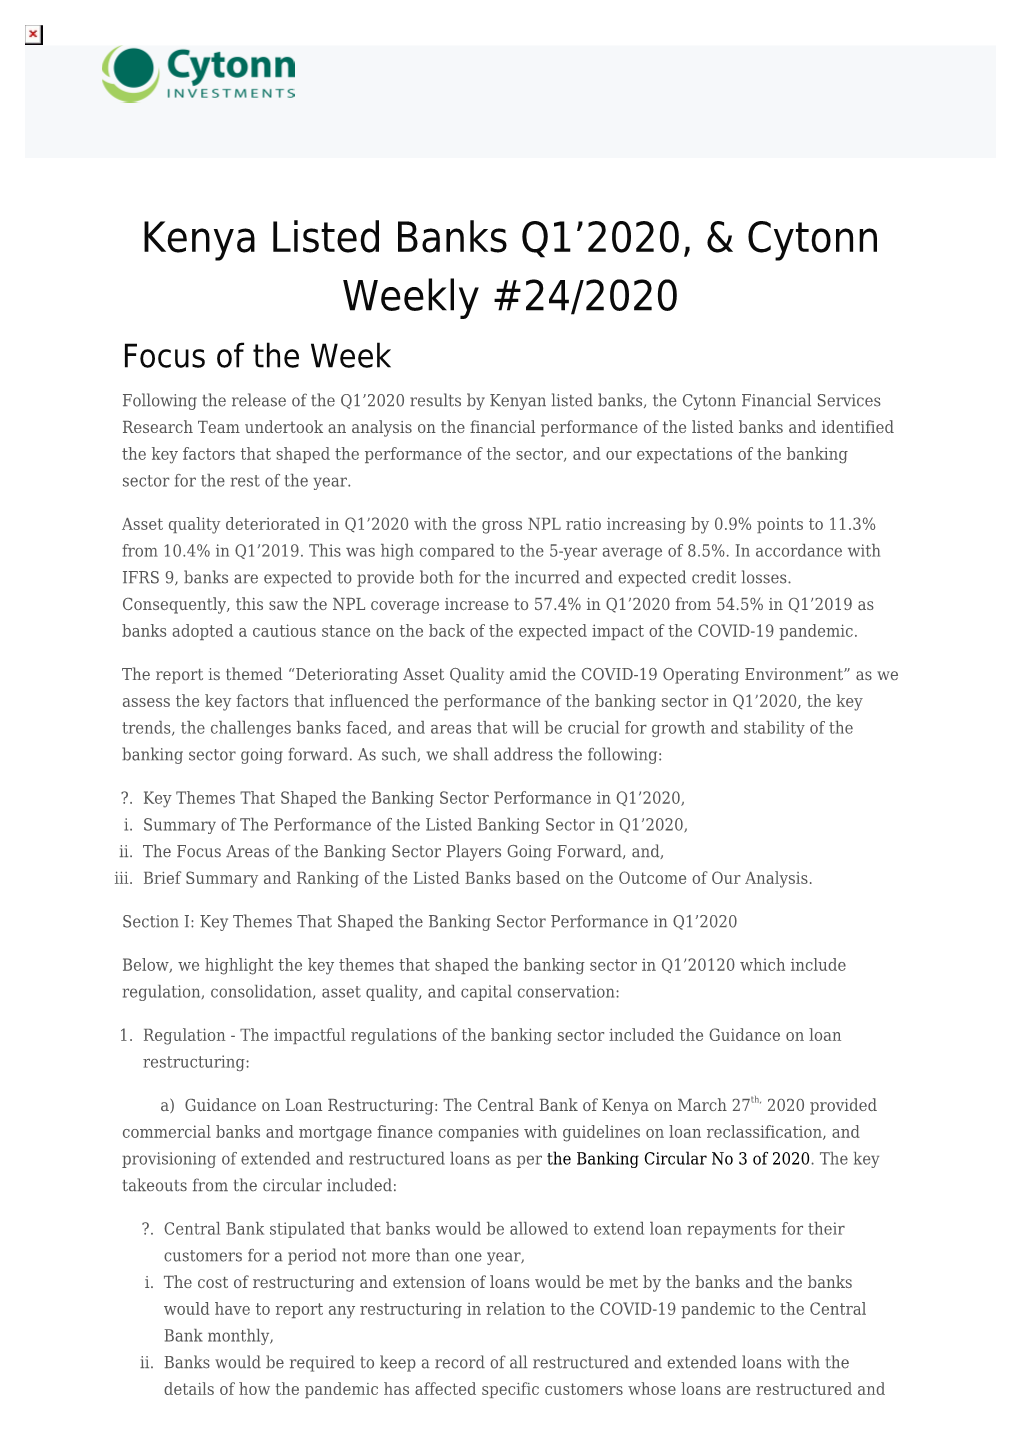 Cytonn Report a Product of Cytonn Technologies